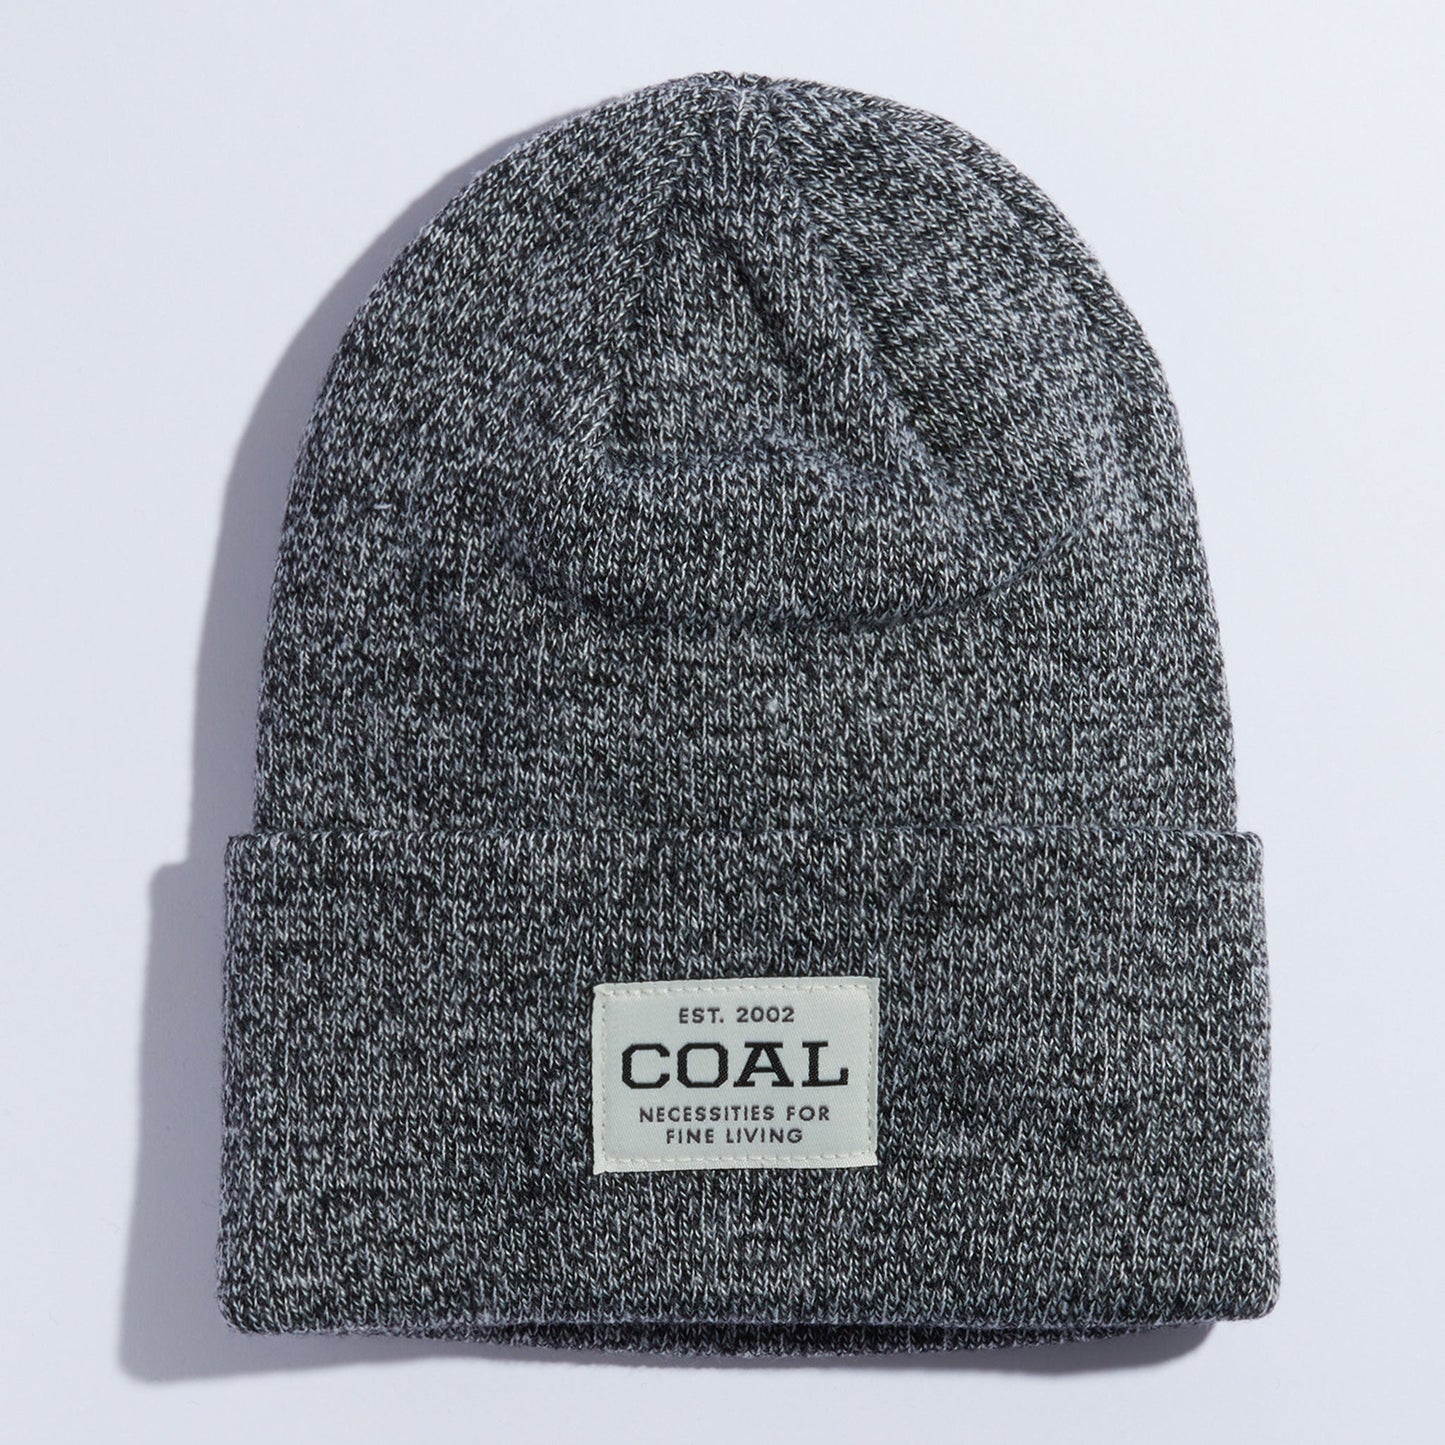 Coal 24 Uniform Recycled Knit Cuff Beanie